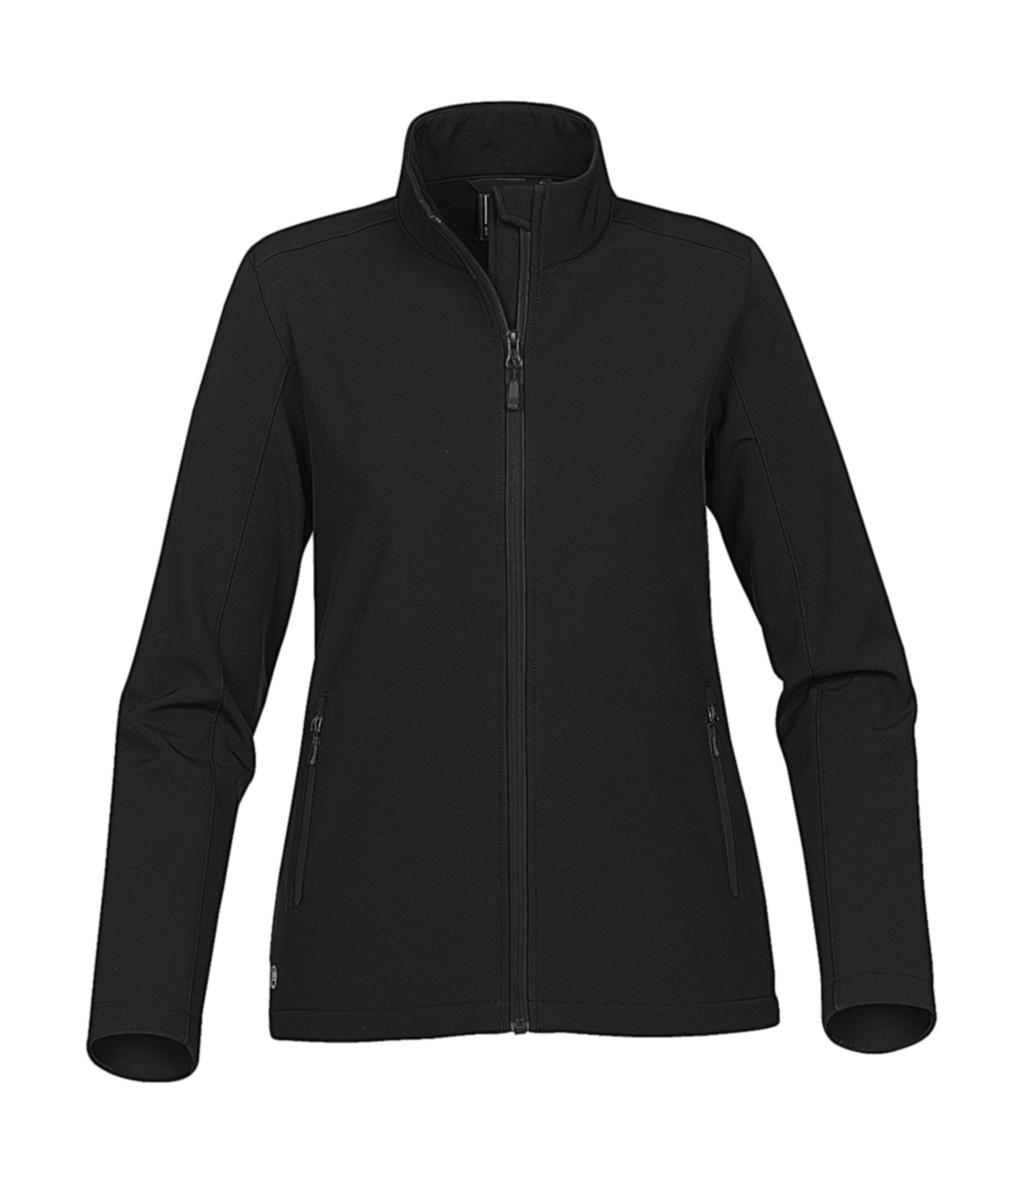 Women's Orbiter Softshell Jacket